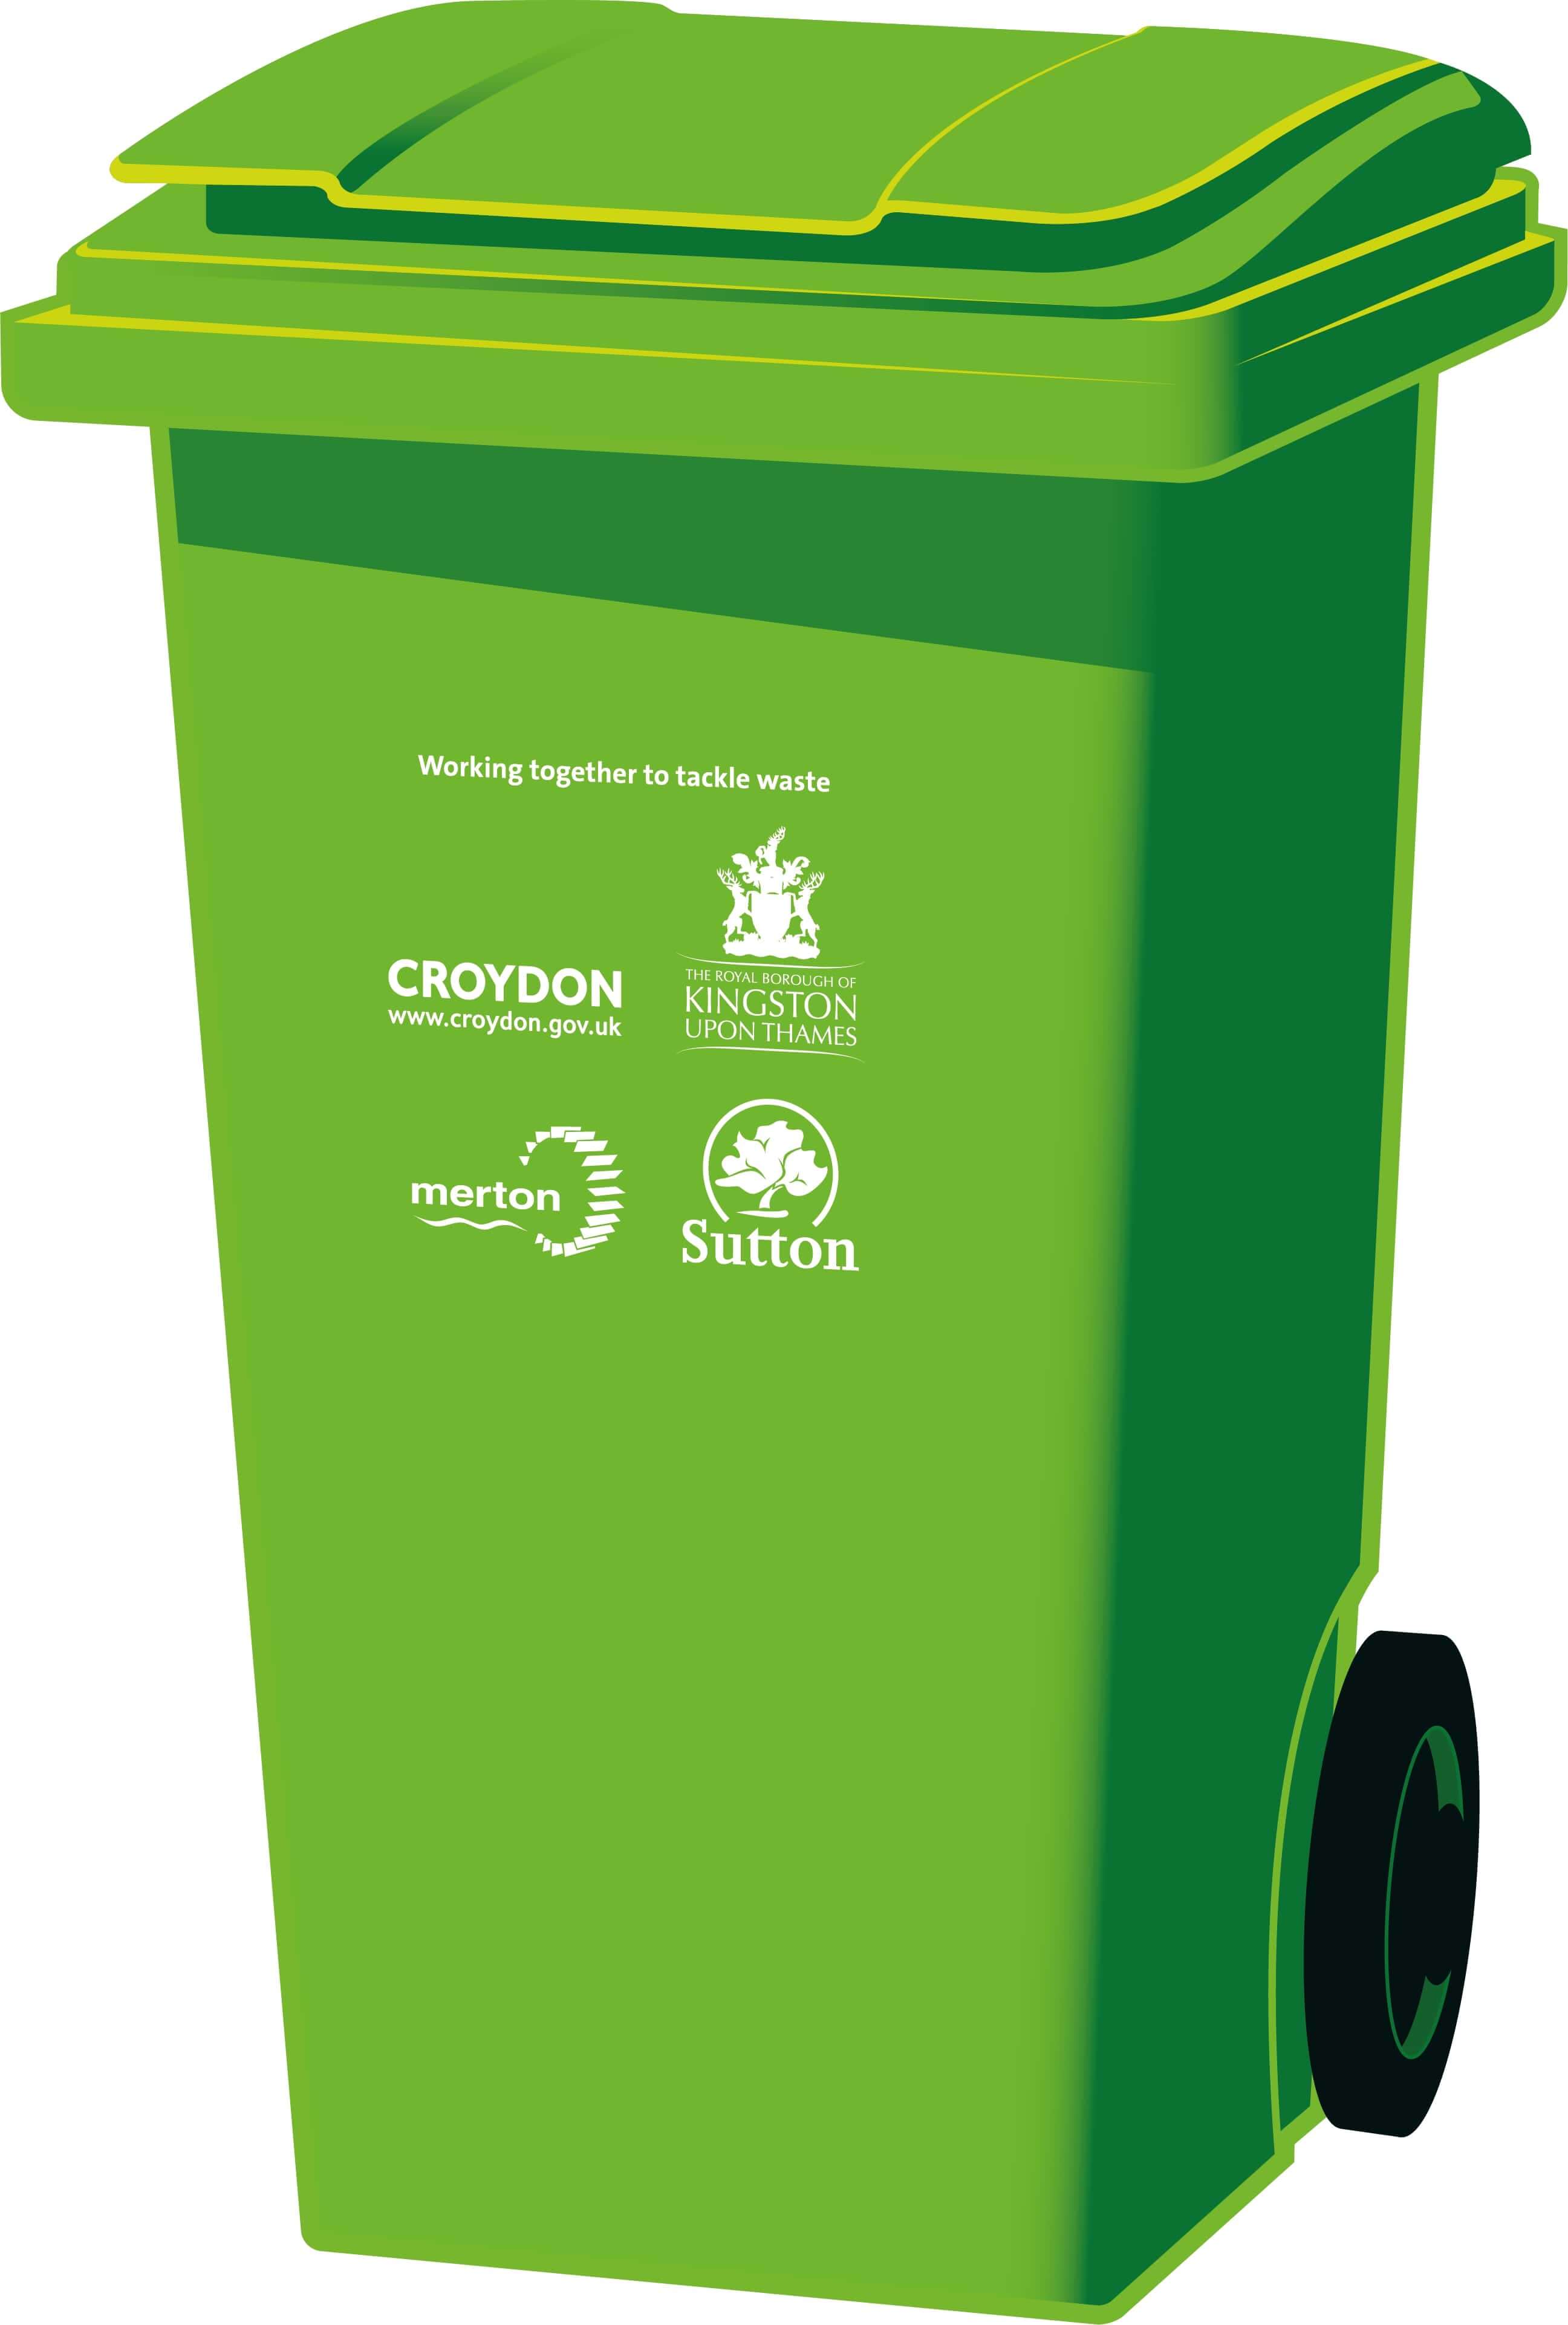 Green recycling wheelie bin with South London Waste Partnership logos on it.